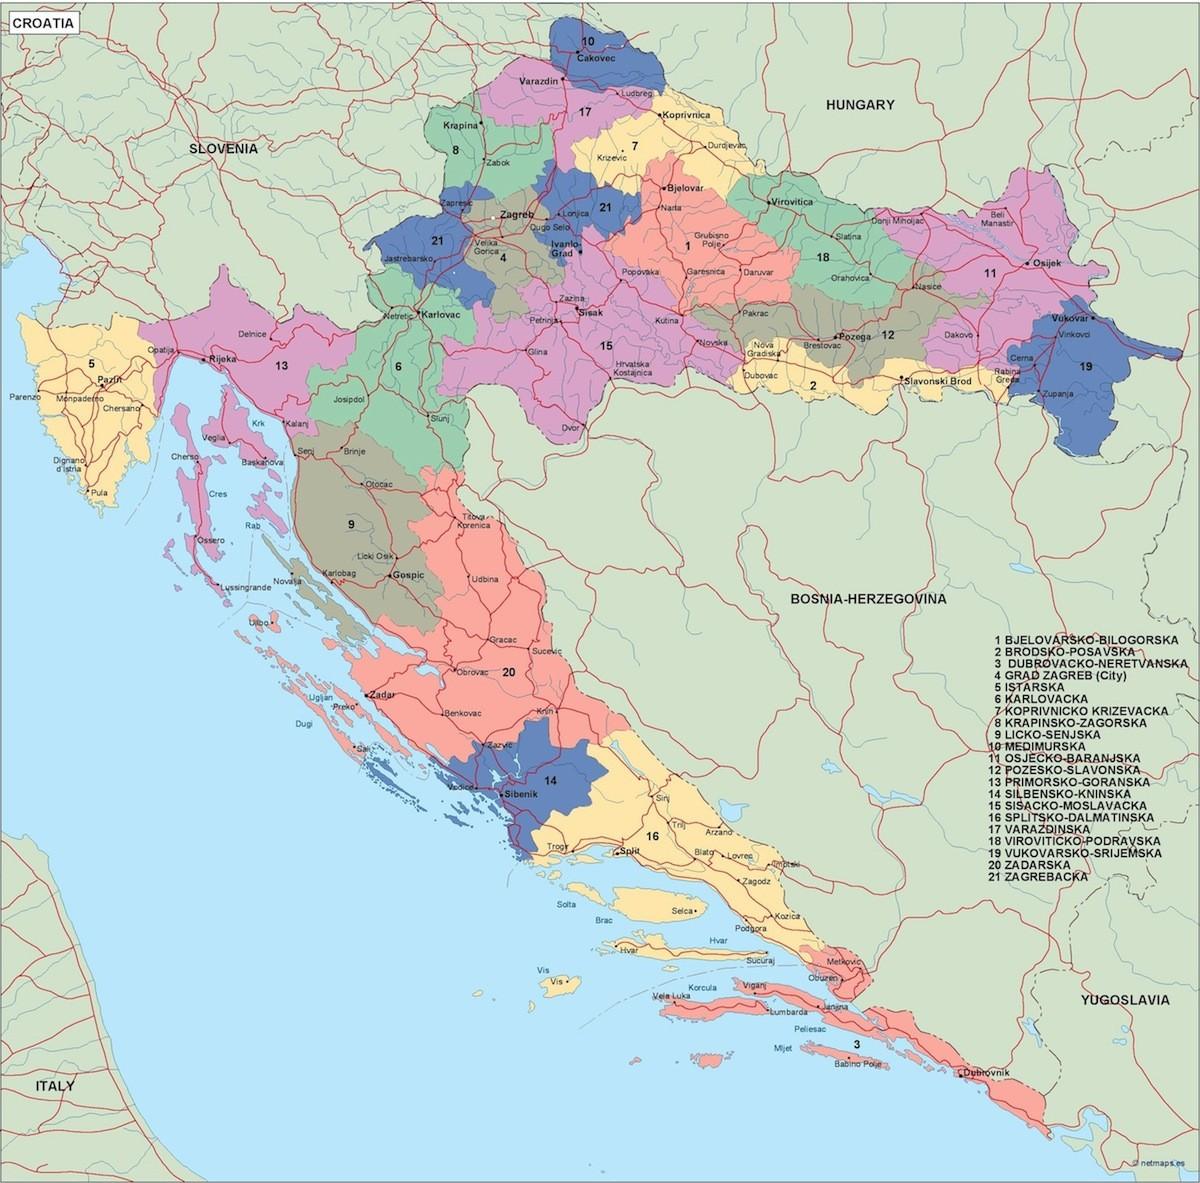 karta hrvatske vektor Vektorska karta Hrvatske, karta Hrvatske vektorska karta (Južna  karta hrvatske vektor